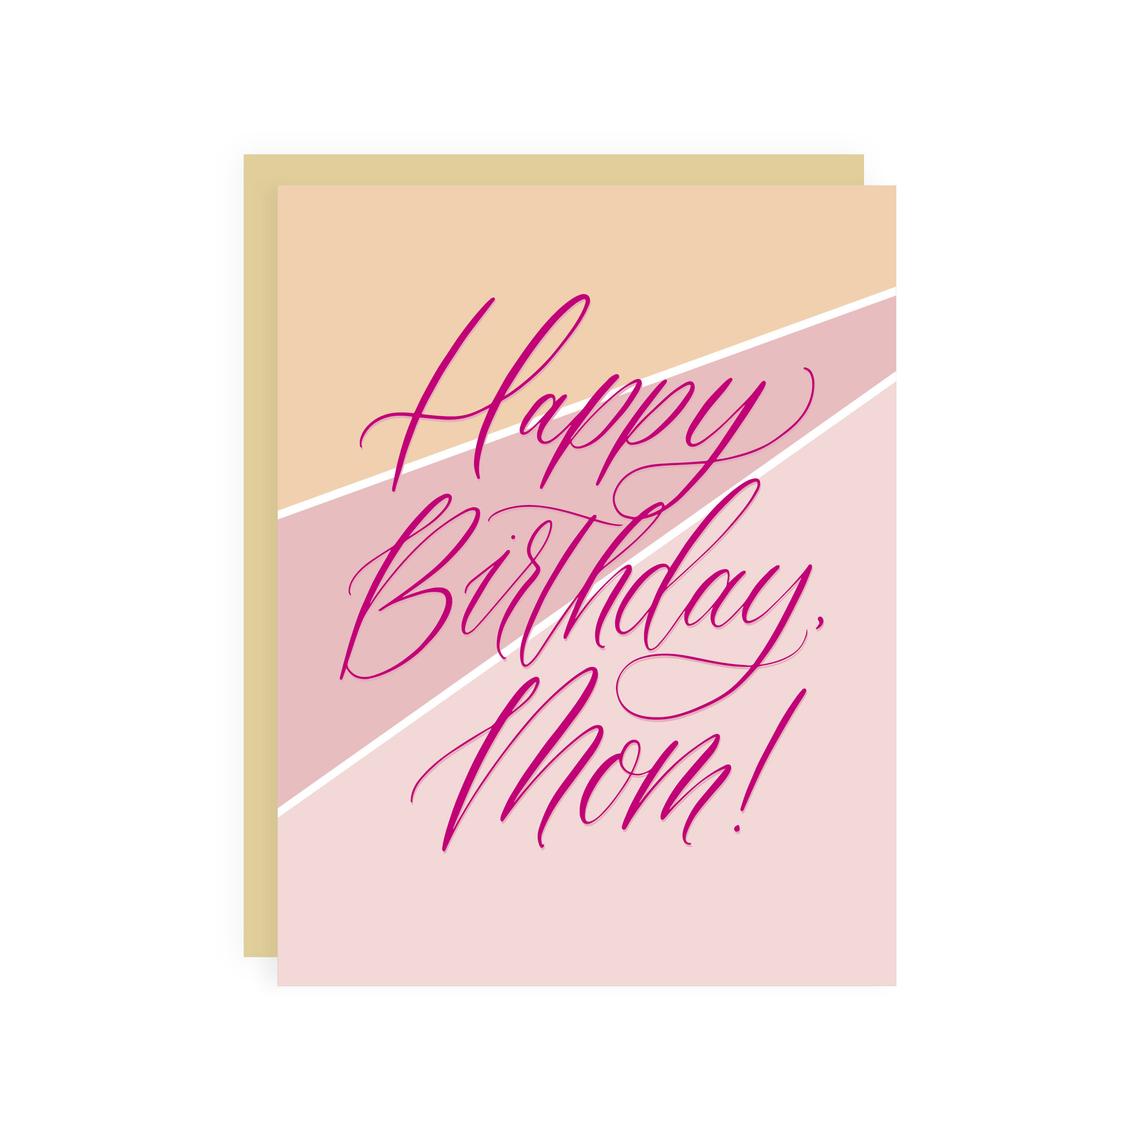 Happy Birthday, Mom! Card